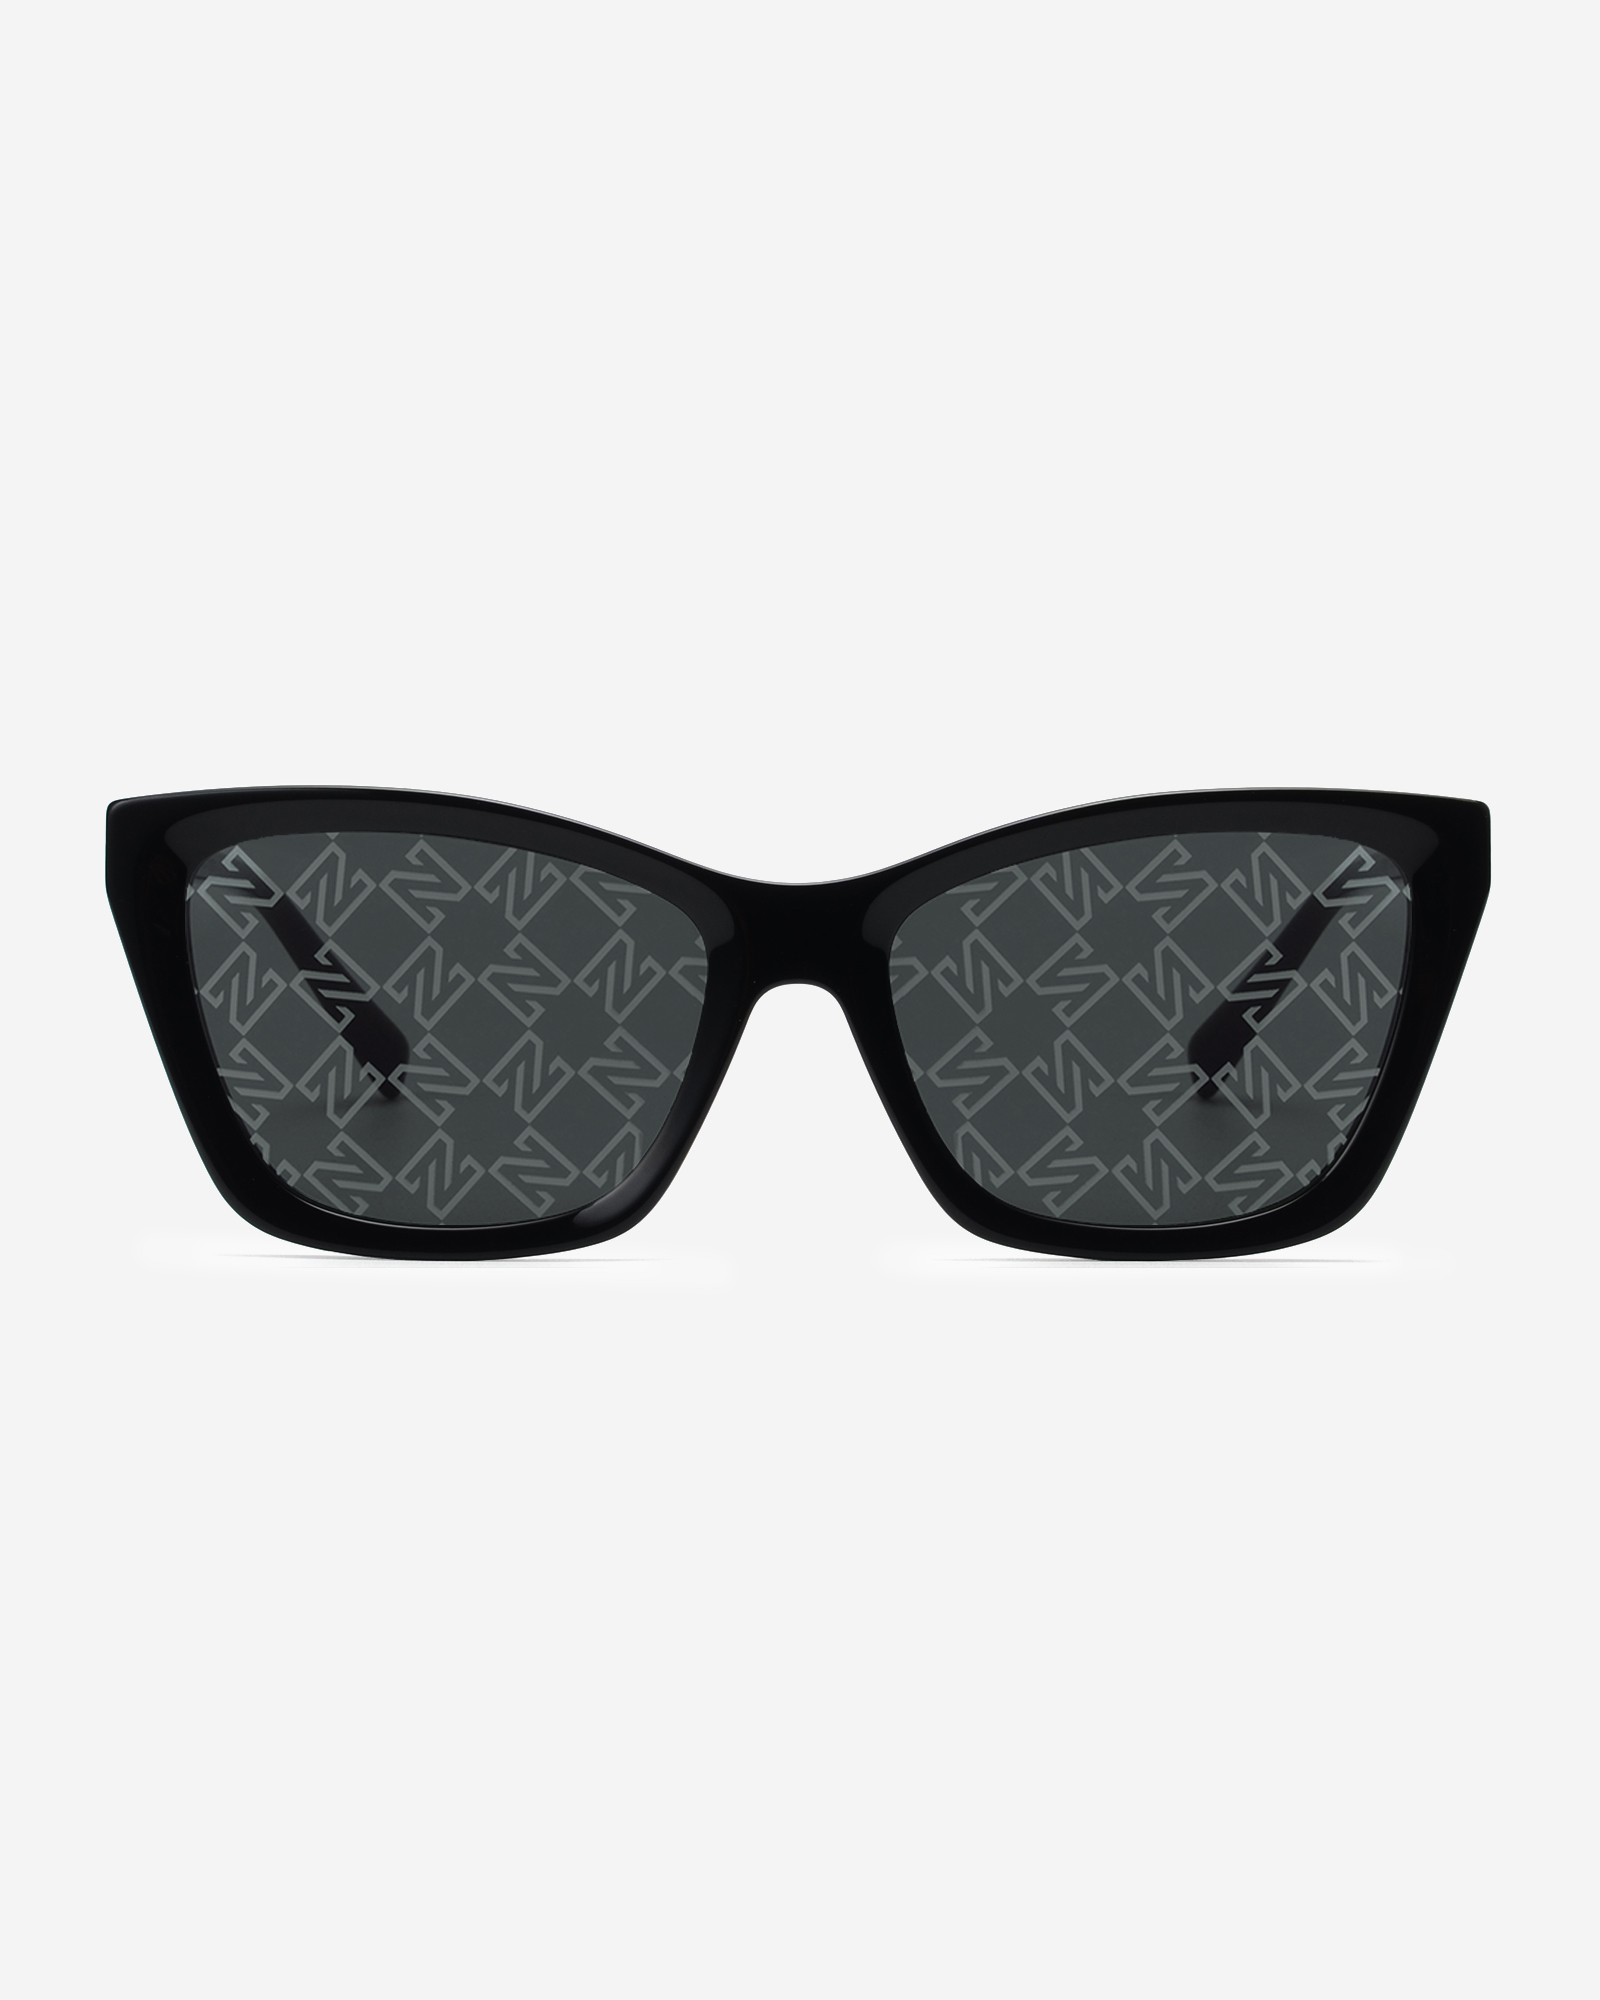  Cat-eye sunglasses with N logo monogram